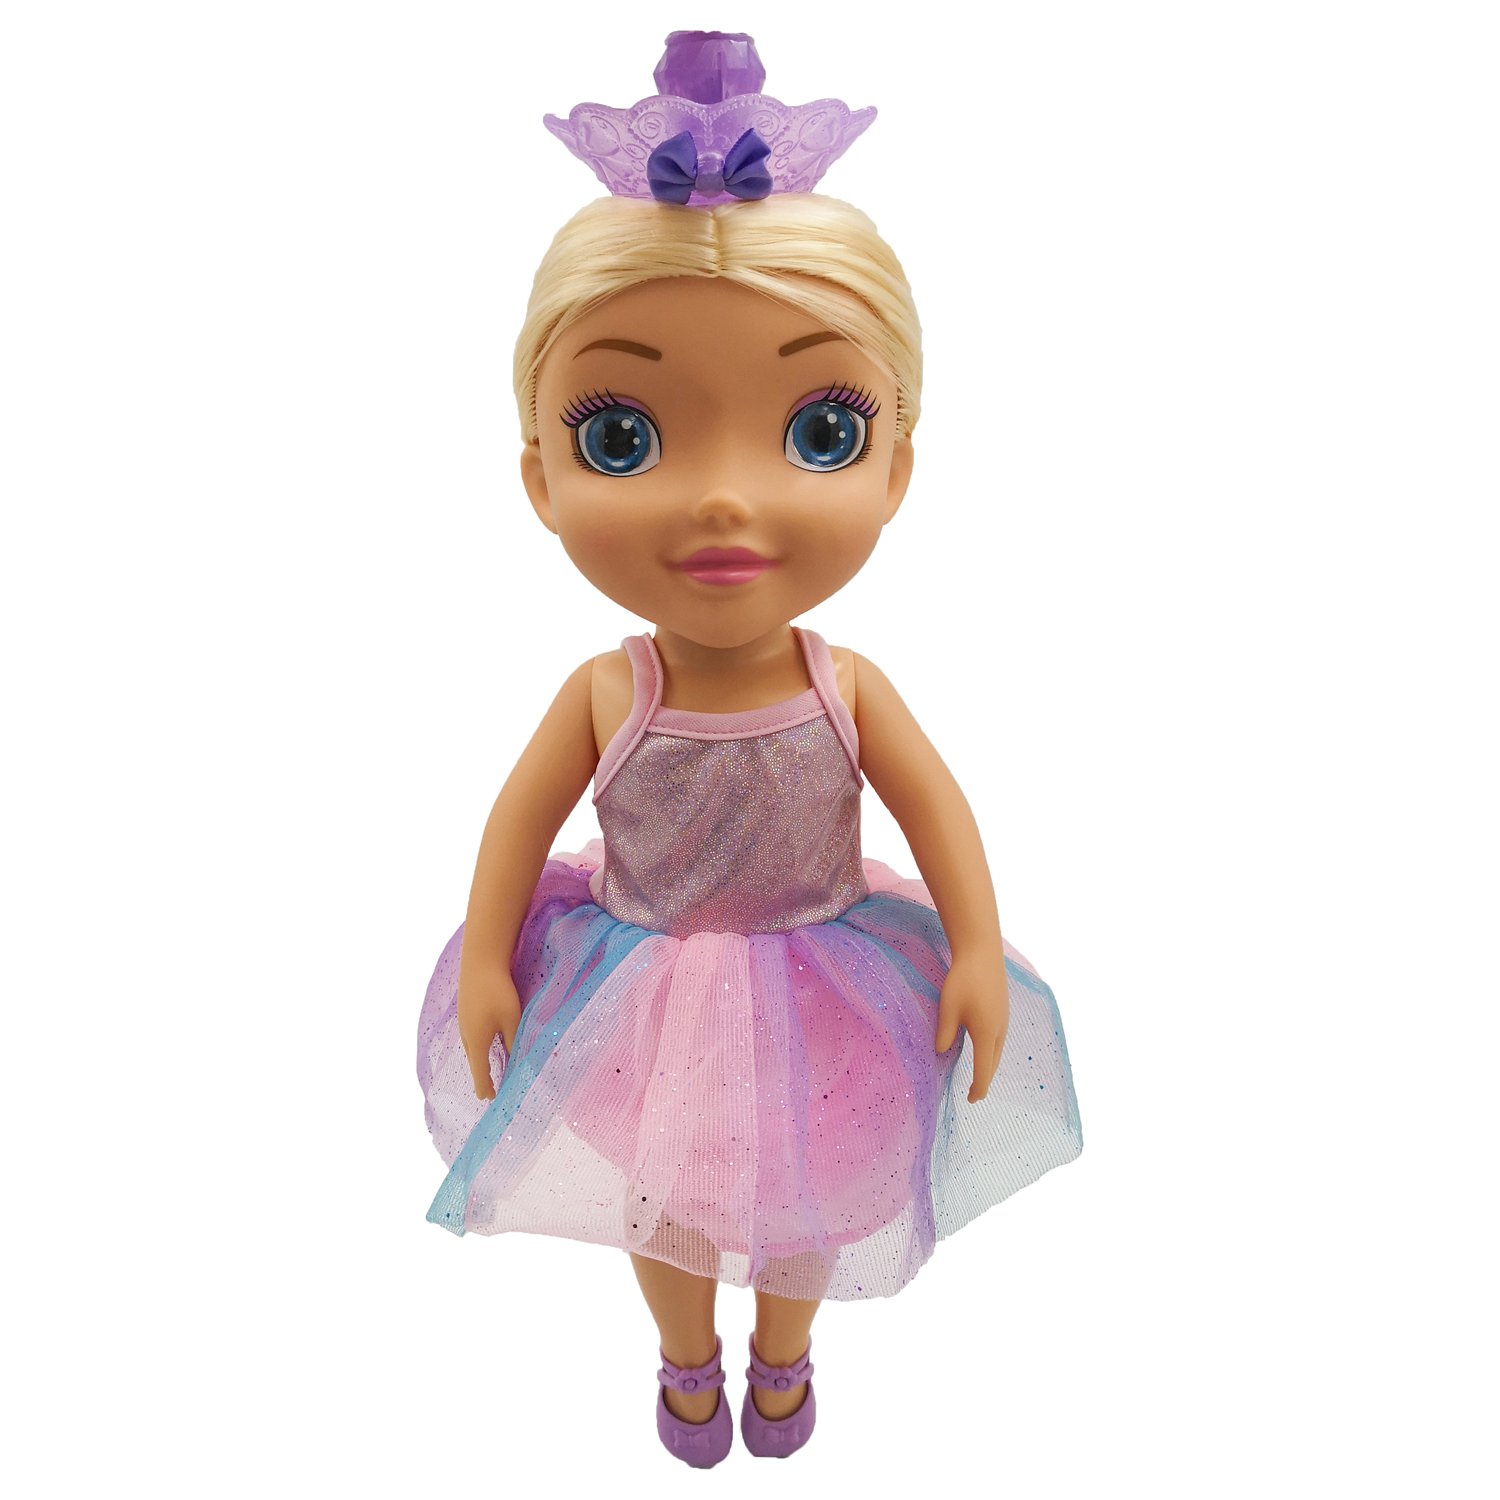 Кукла Ballerina Dreamer - Танцующая балерина со светлыми волосами, 45 см, свет, звук интерактивная игрушка ballerina dreamer кукла танцующая балерина свет звук 45 см